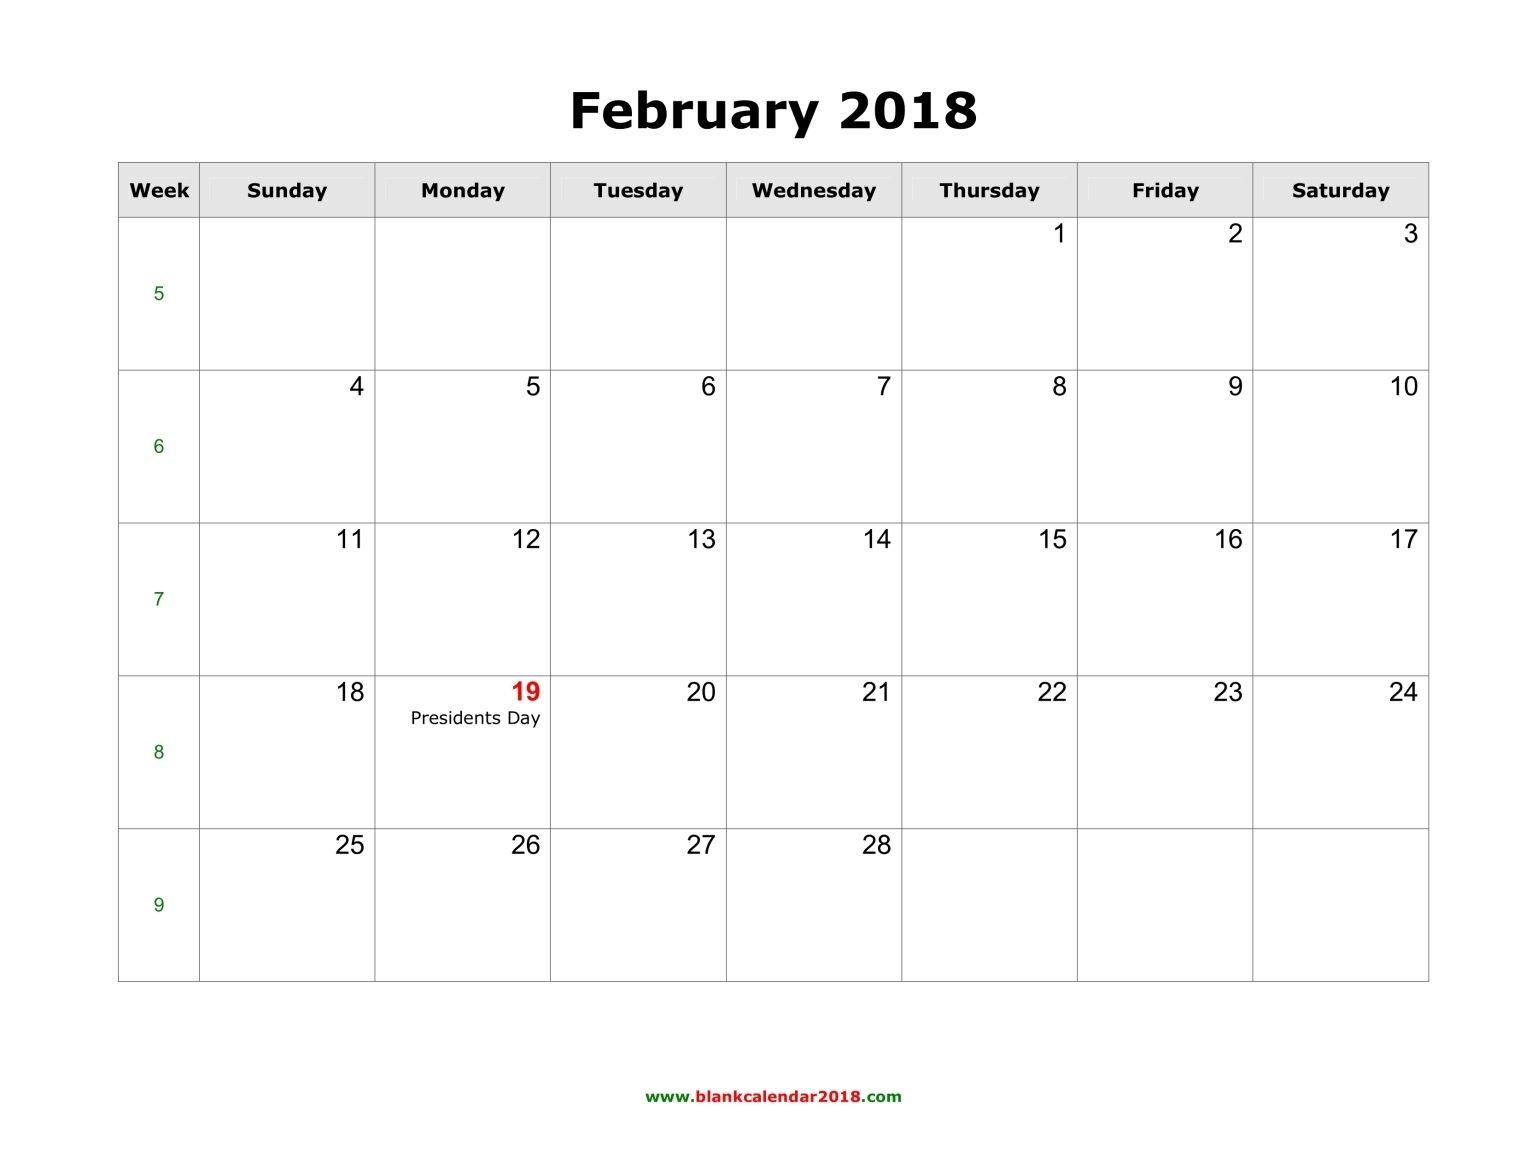 February 2018 Calendar With Holidays calendar printable